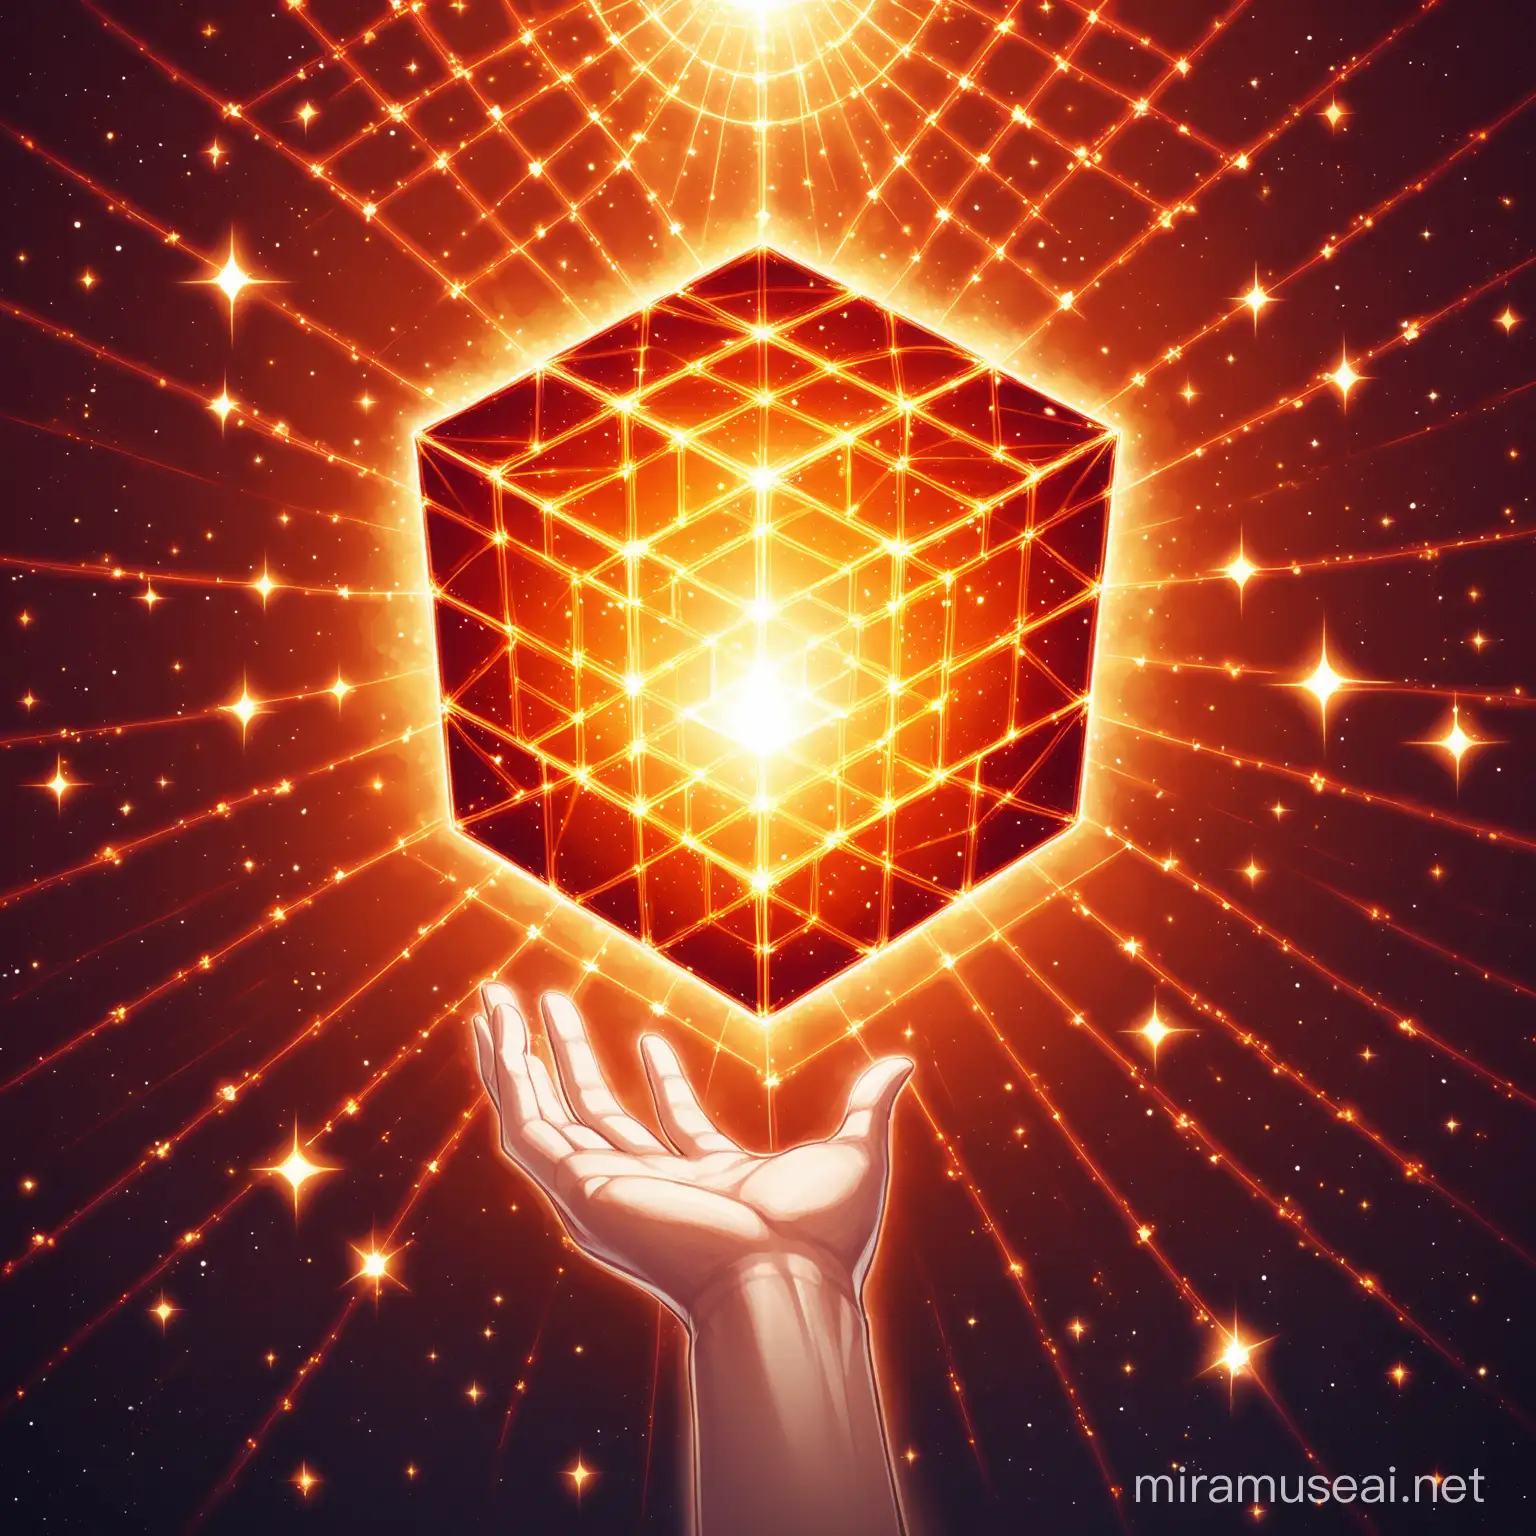 Young Man Reaches for Mystical Interdimensional Orange Cube